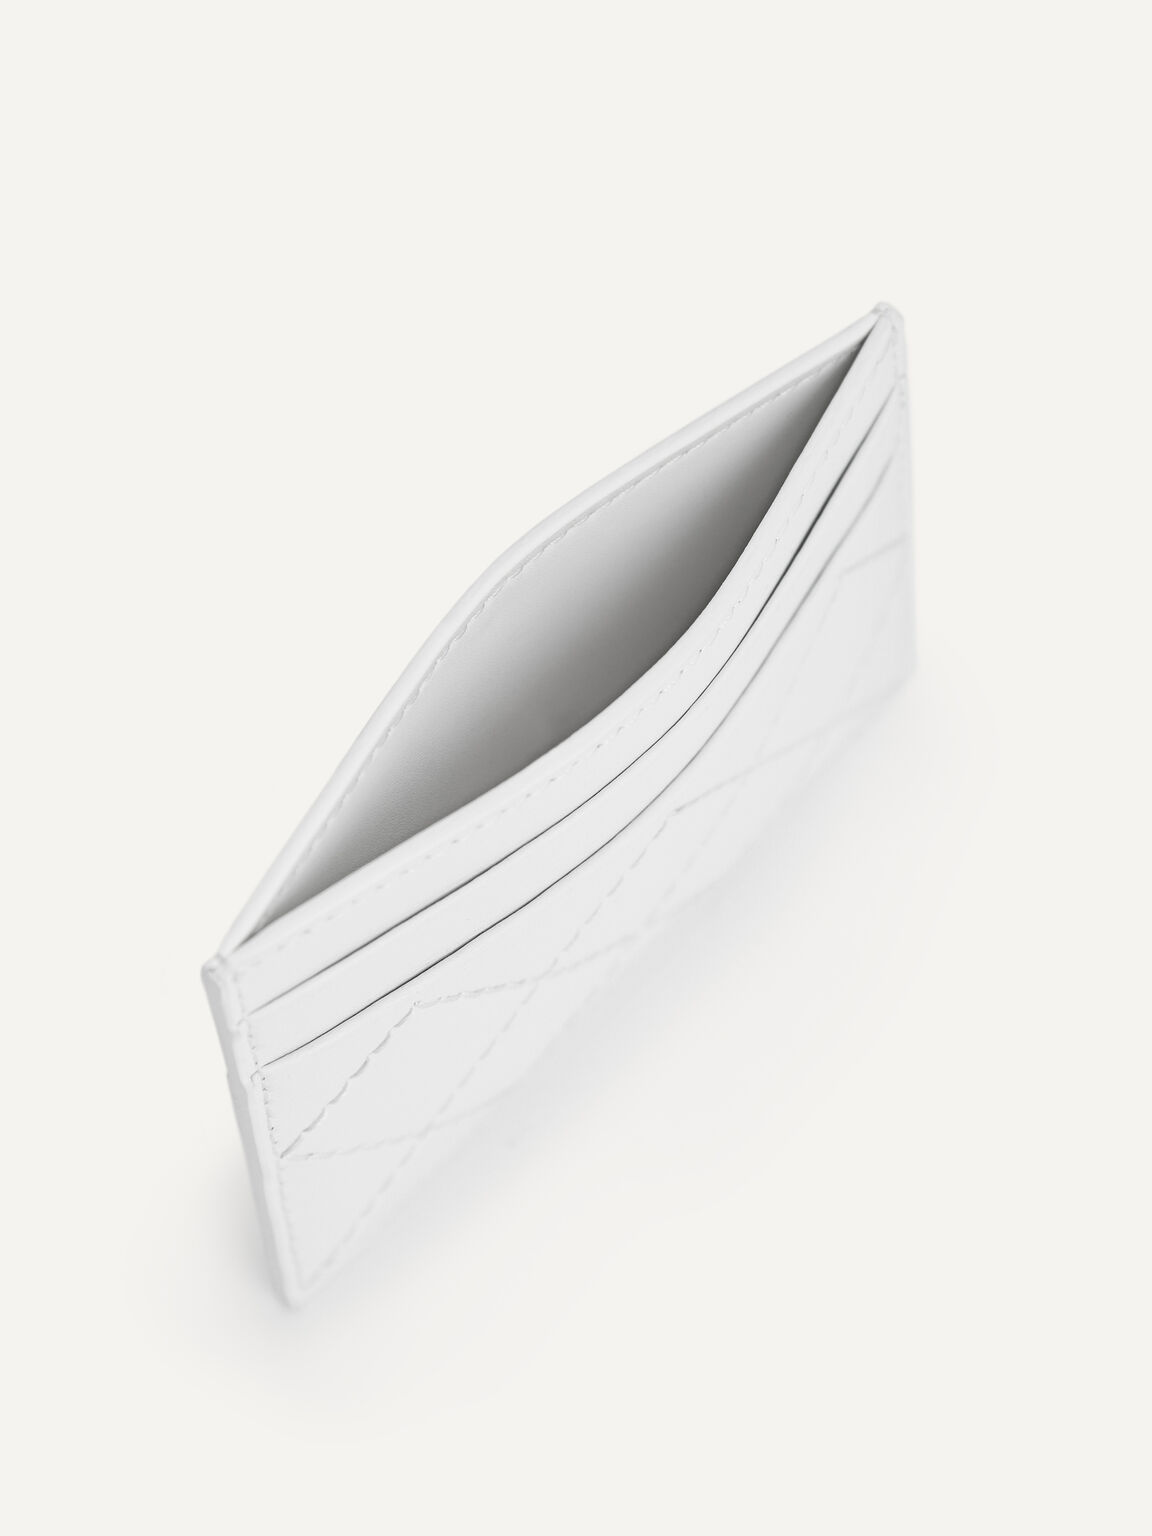 Cris-Cross Pattern Leather Cardholder, White